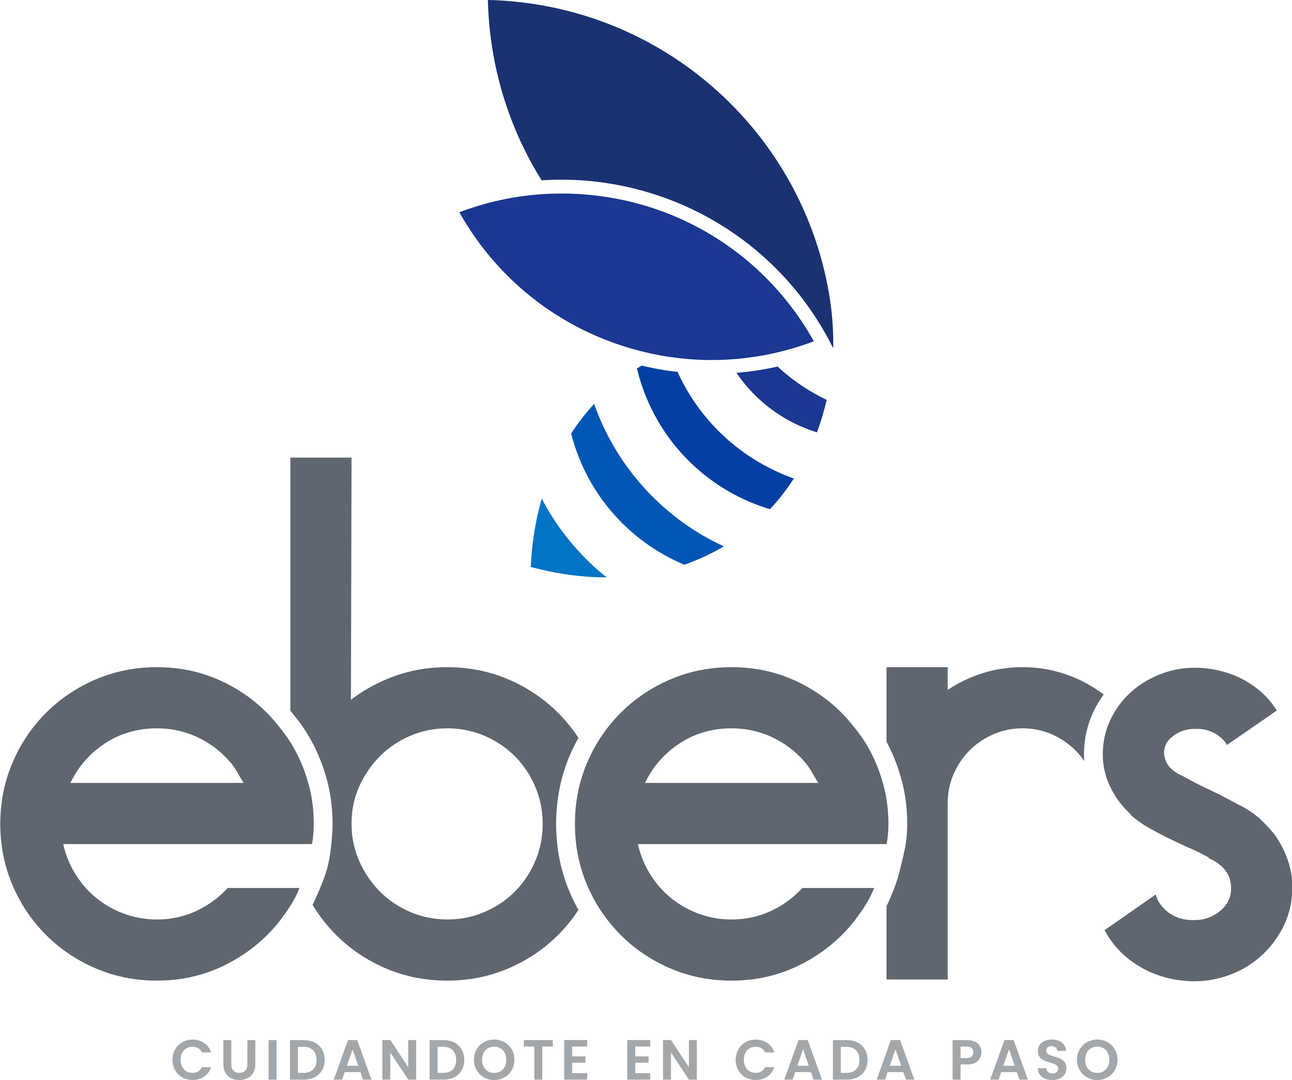 Ebers logo